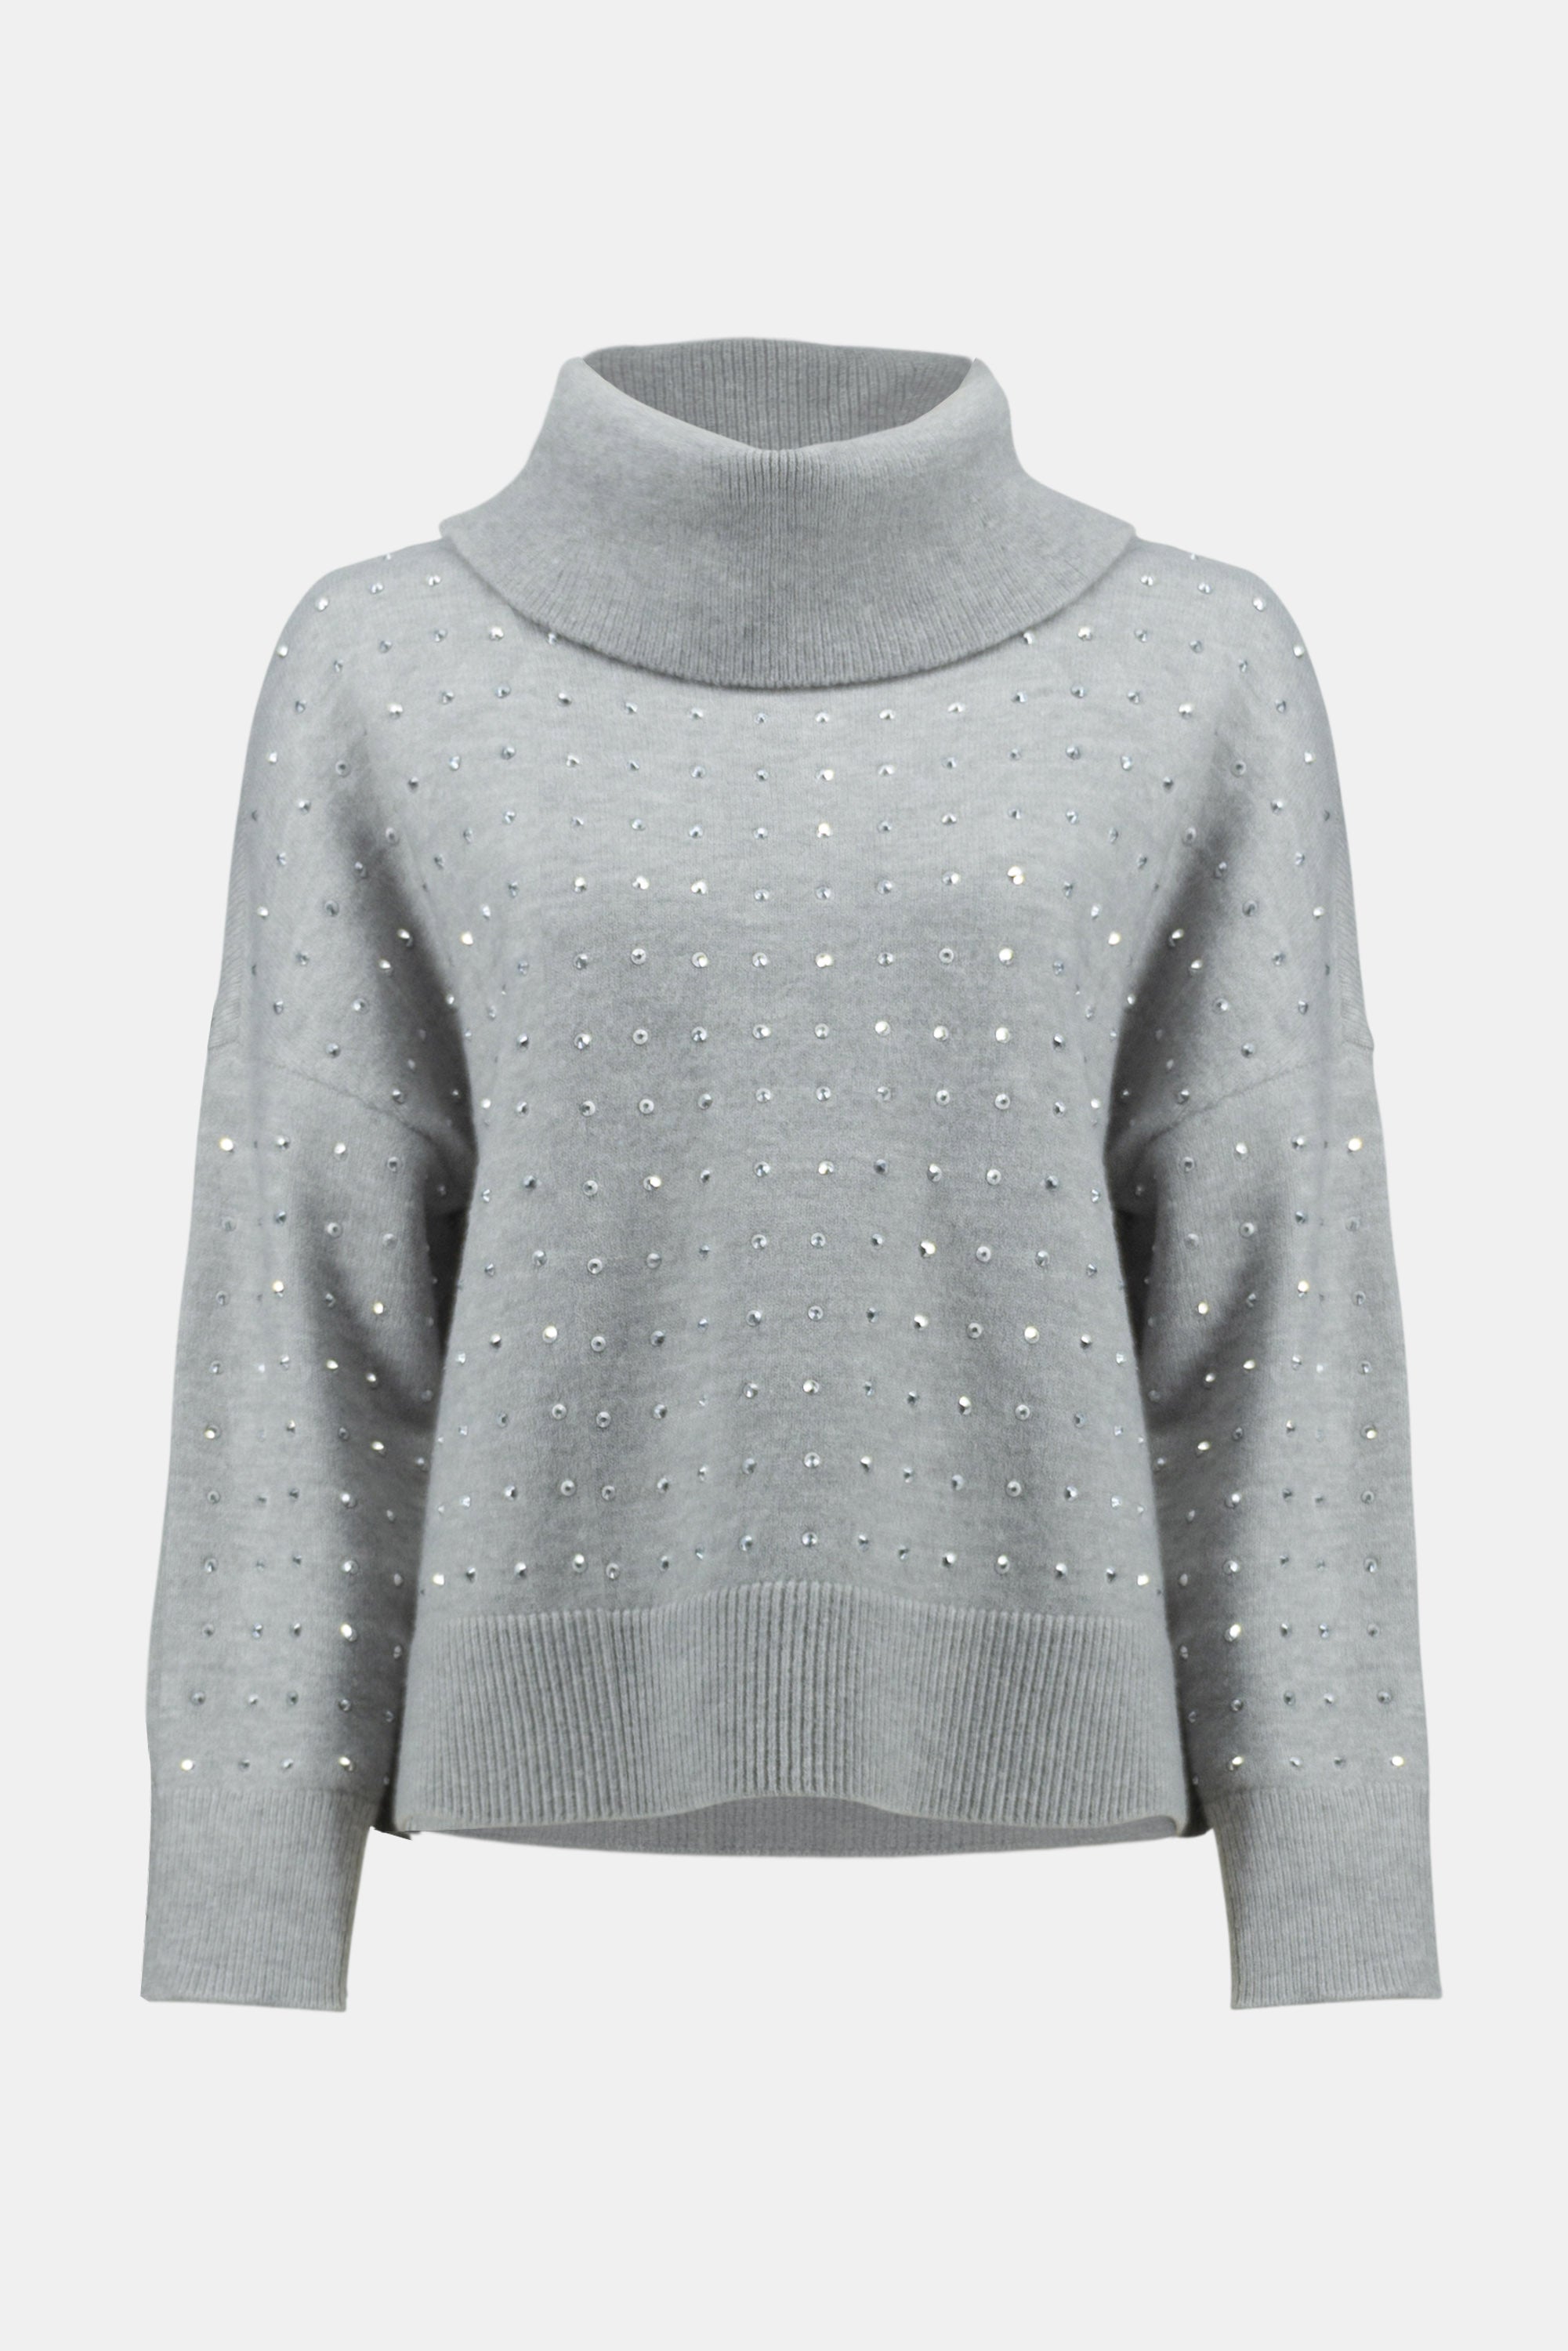 Joseph Ribkoff Sparkle Sweater